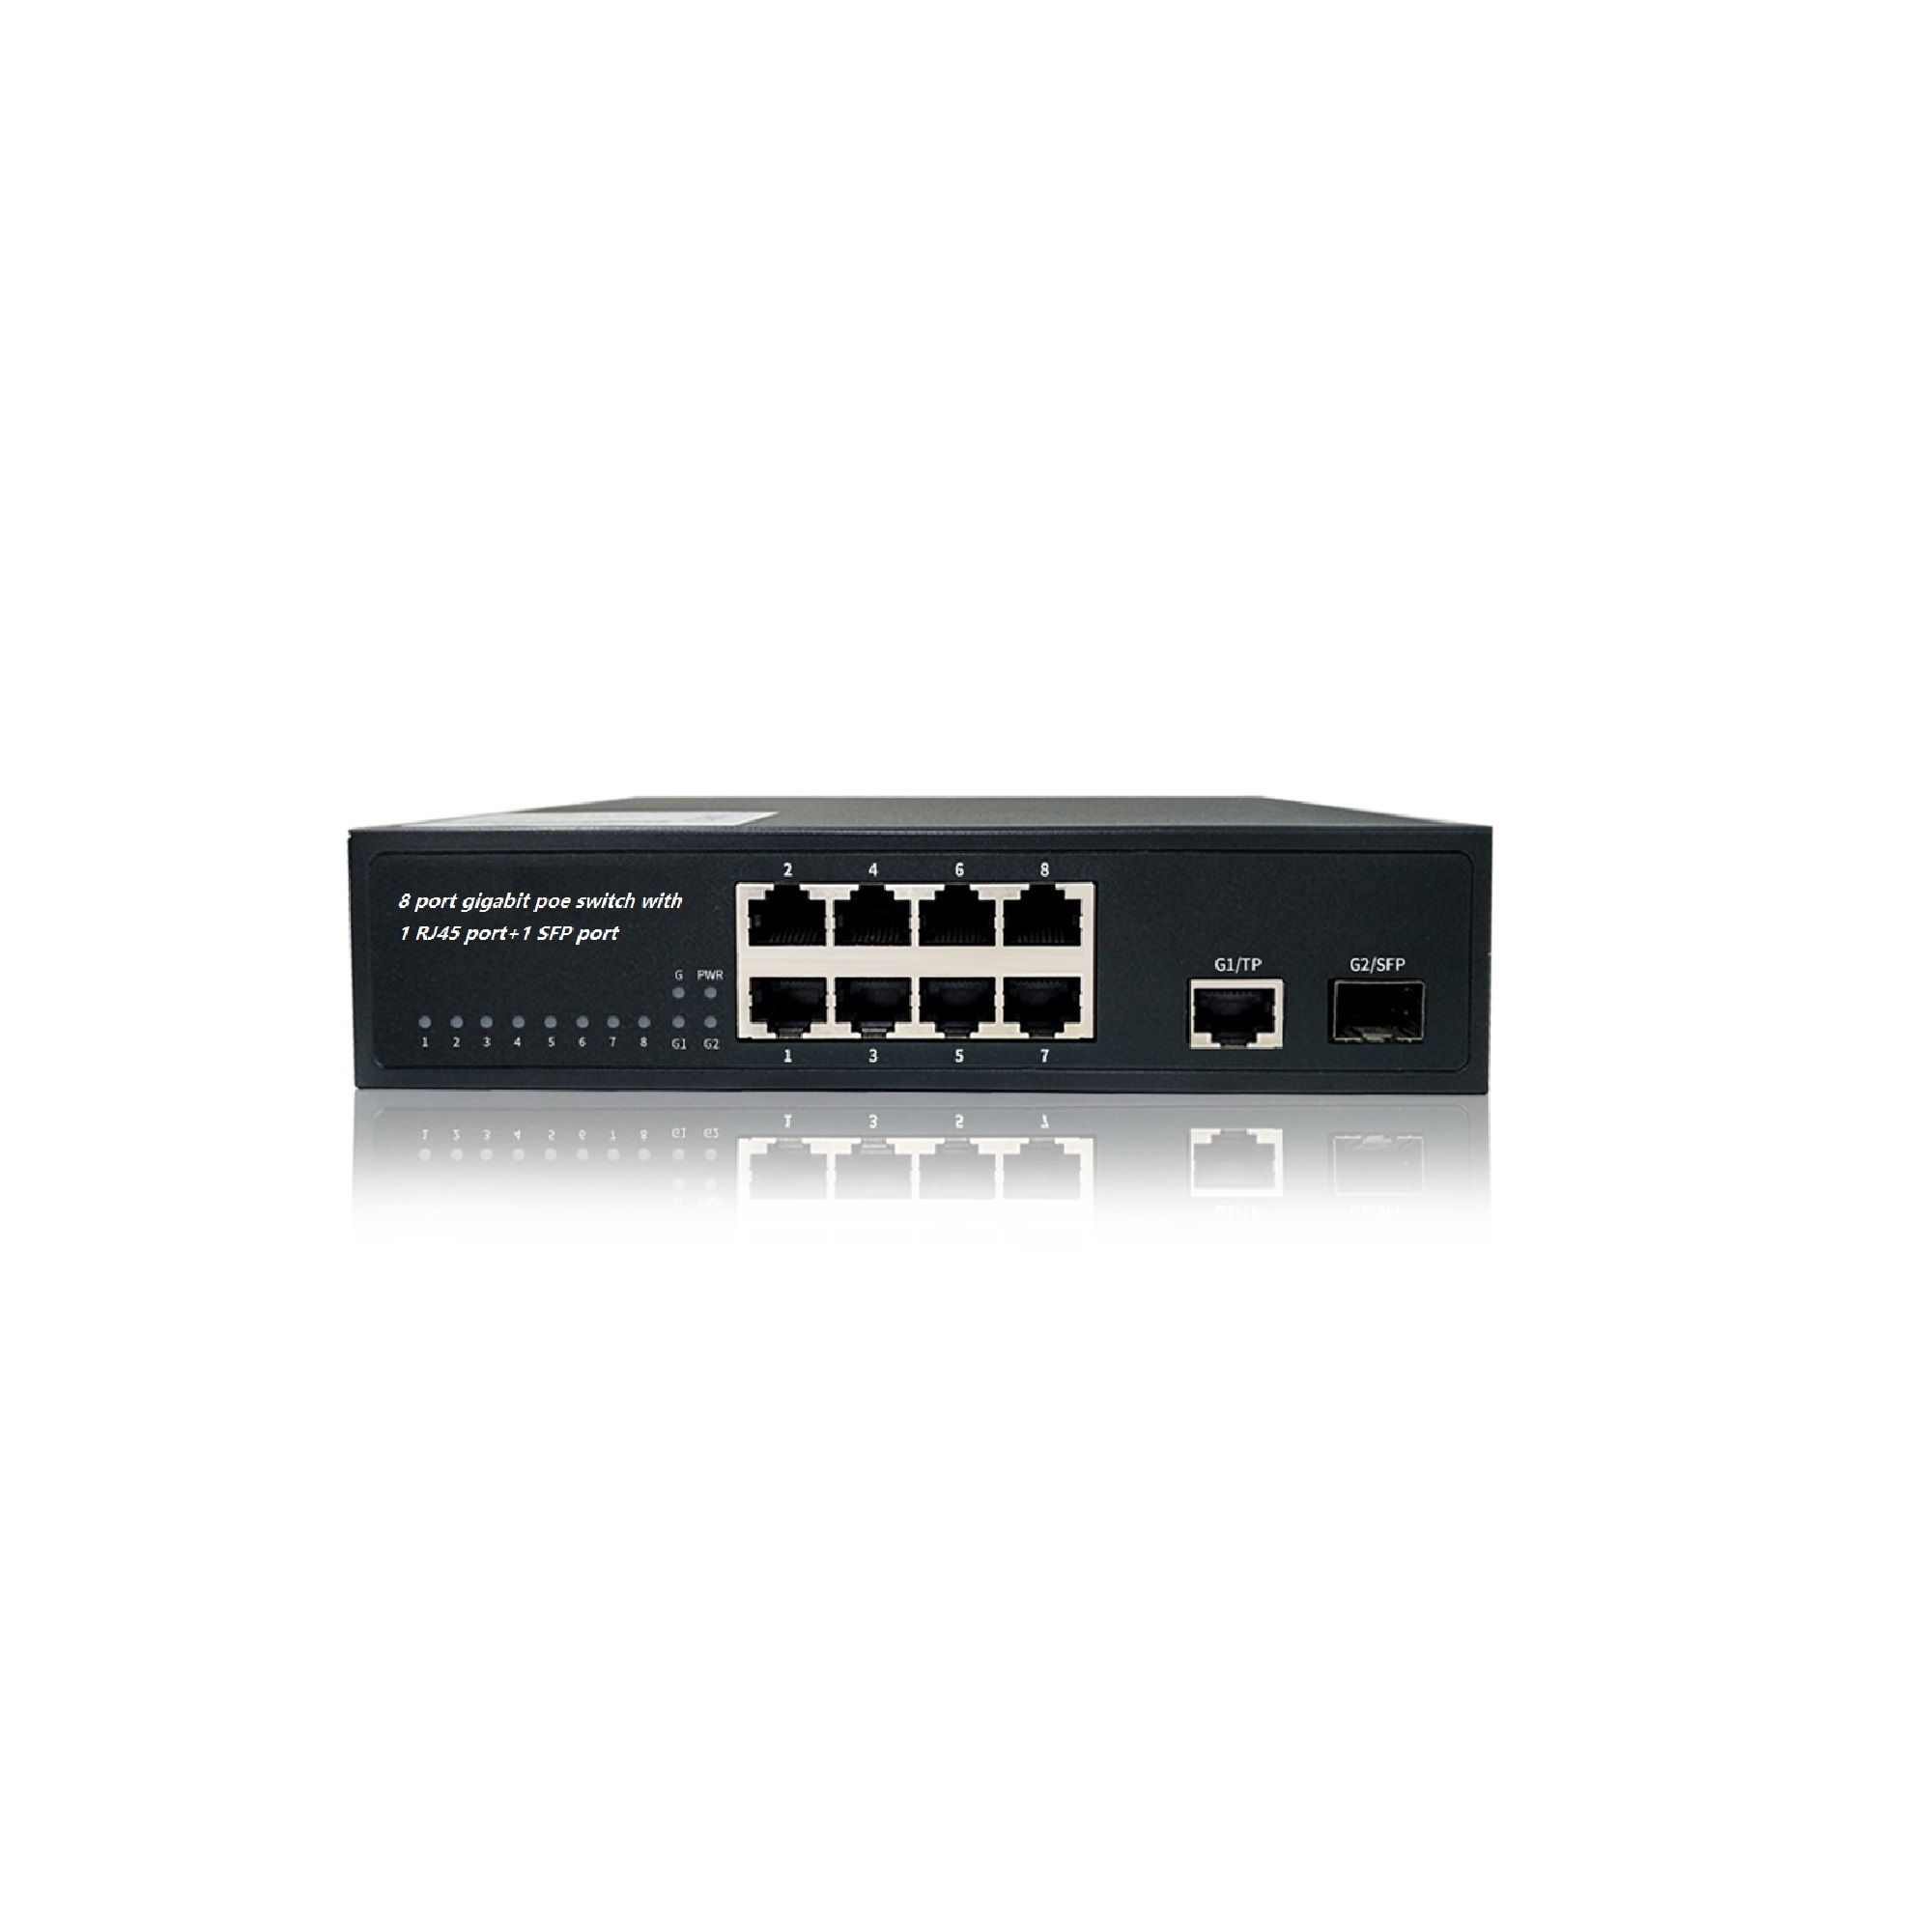 Network Switch 8 Port POE  Gigabit 150W + 1GE Uplink Port 